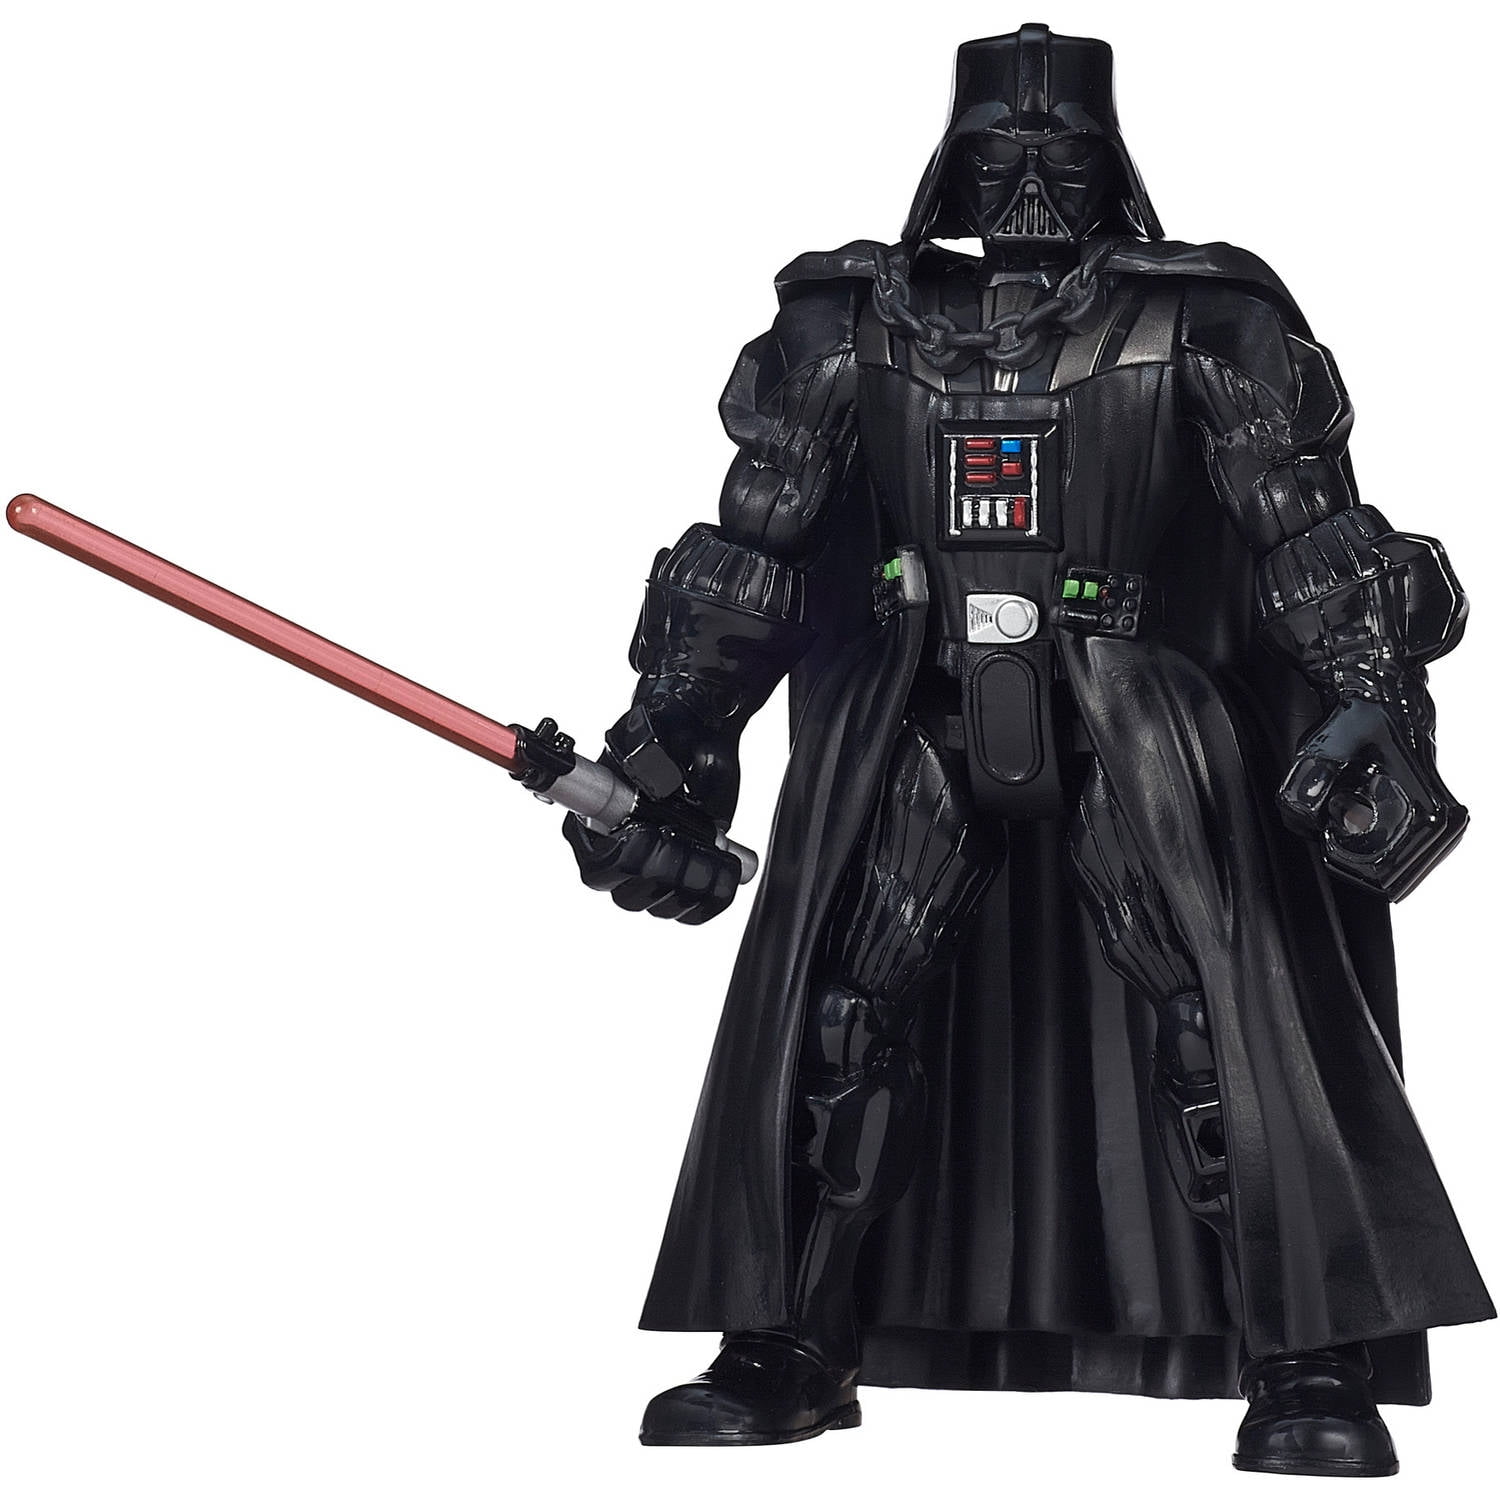 Hasbro Hero Mashers Star Wars Darth Vader 